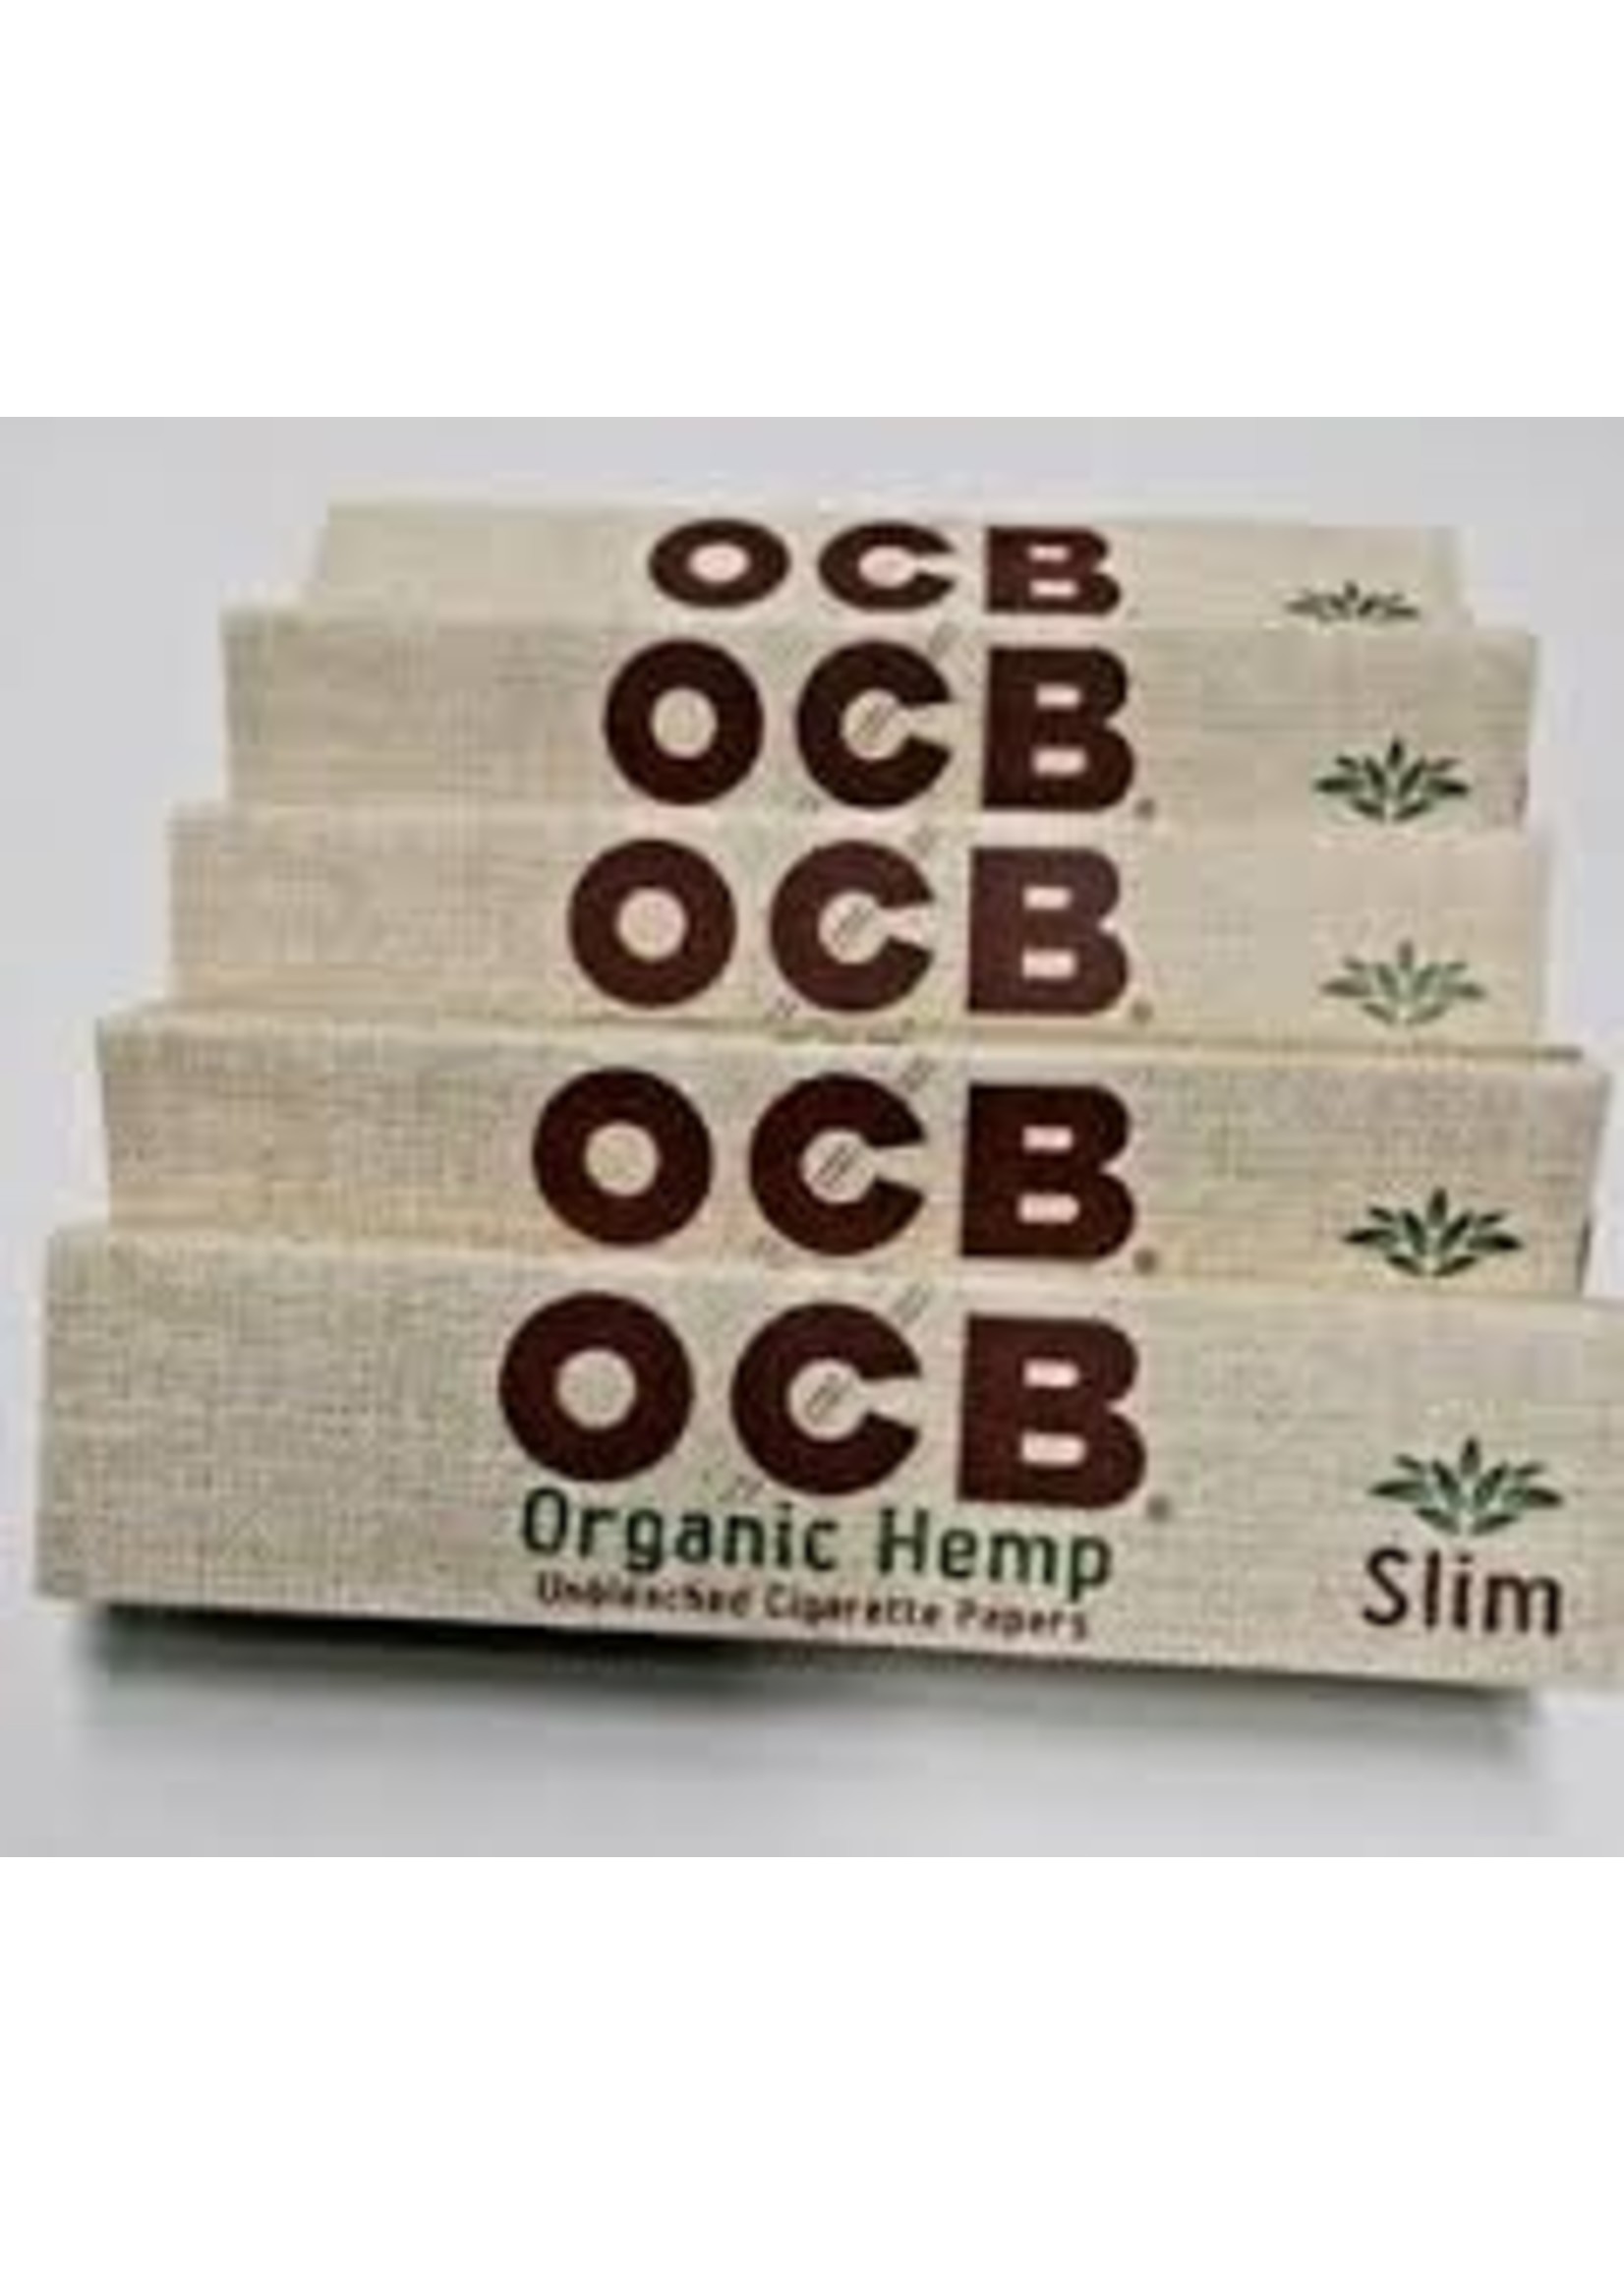 OCB OCB Organic Hemp Papers